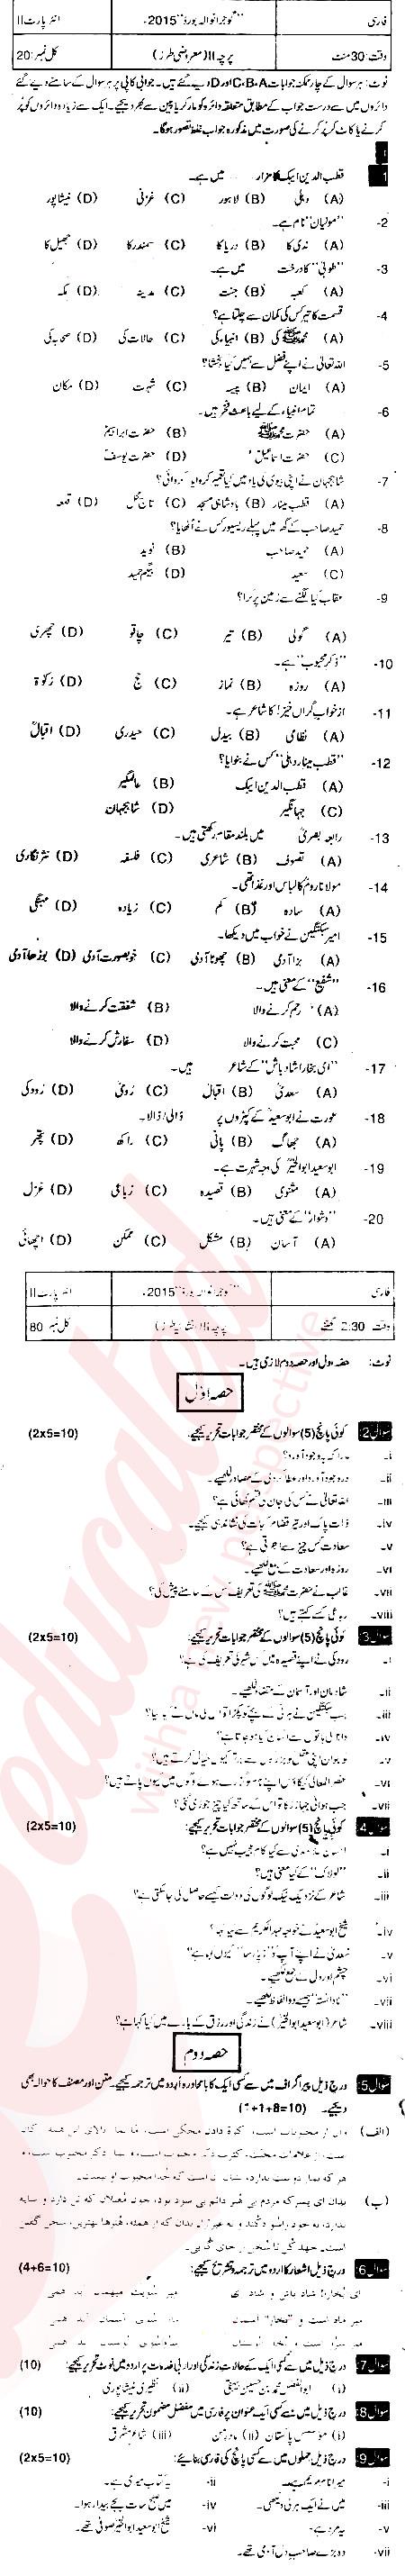 Persian FA Part 2 Past Paper Group 1 BISE Gujranwala 2015